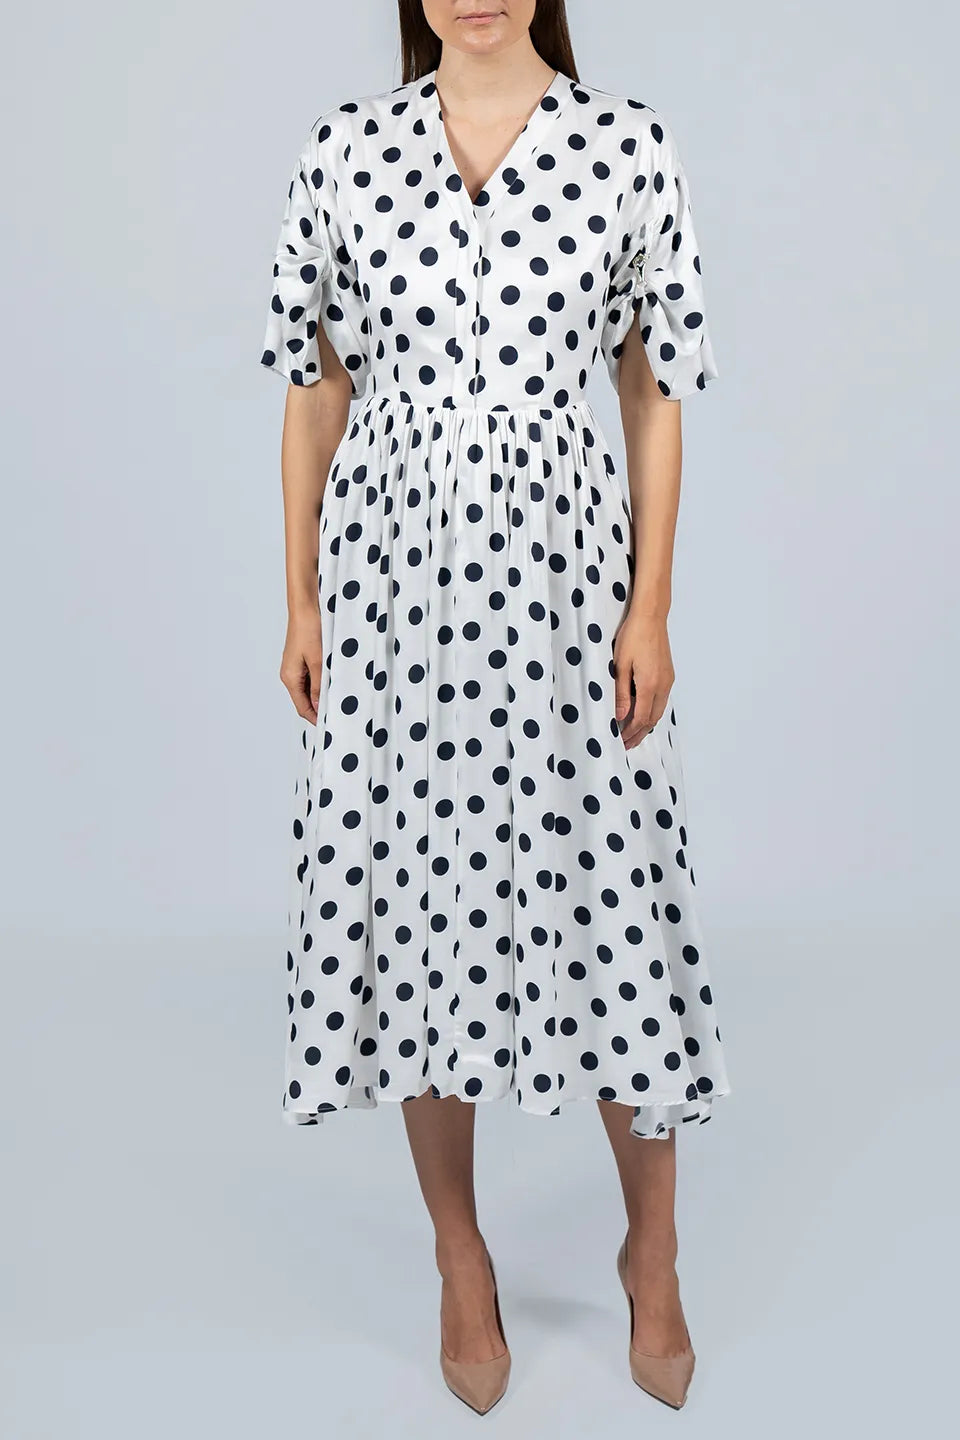 Shop online trendy White Midi dresses from Vivetta Fashion designer. Product gallery 1